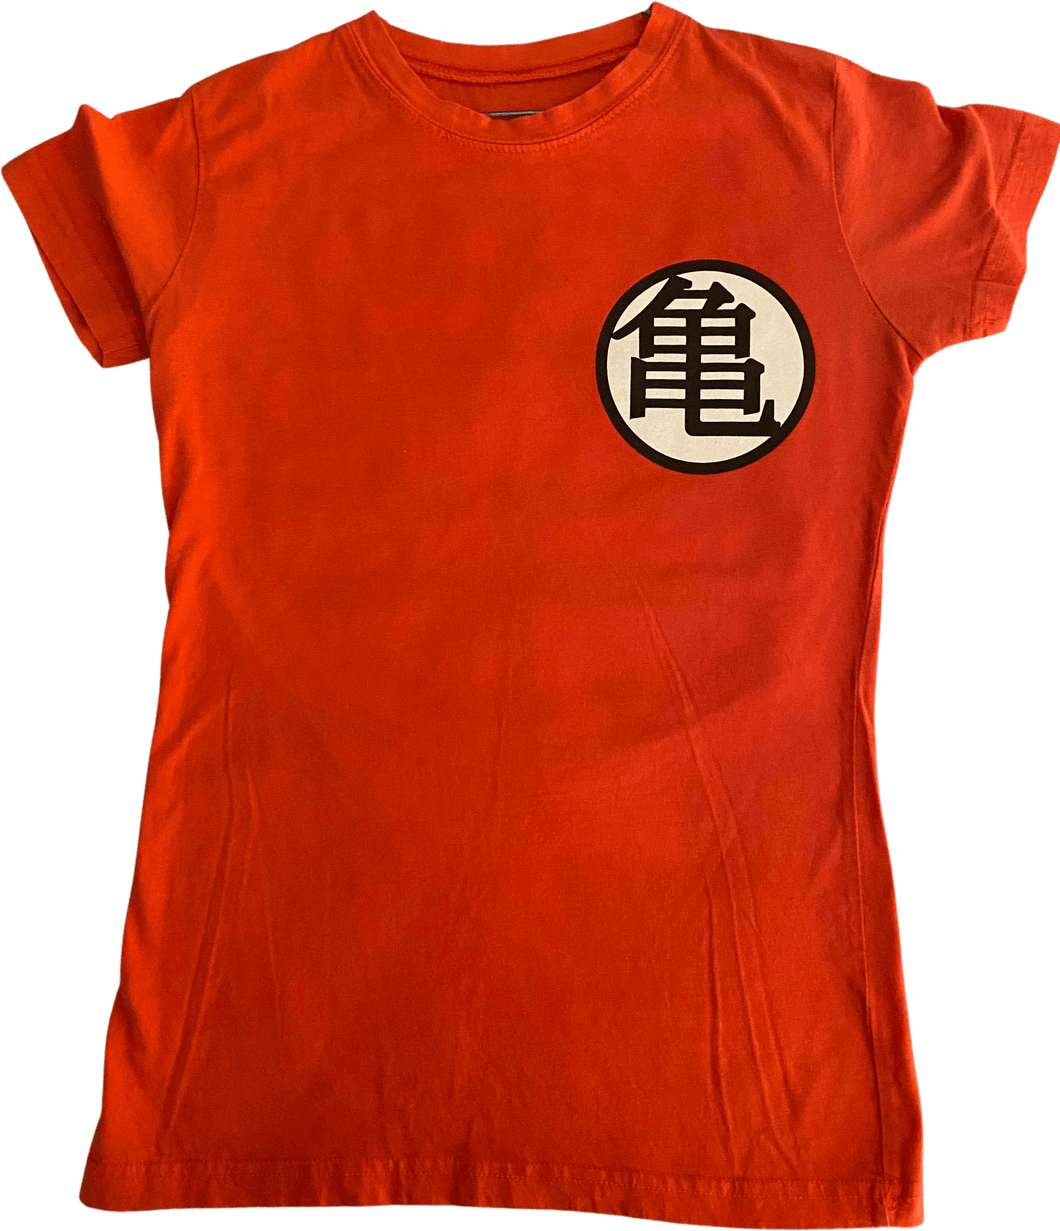 1990's Dragon Ball Z logo t-shirt; be a Z Warrior!